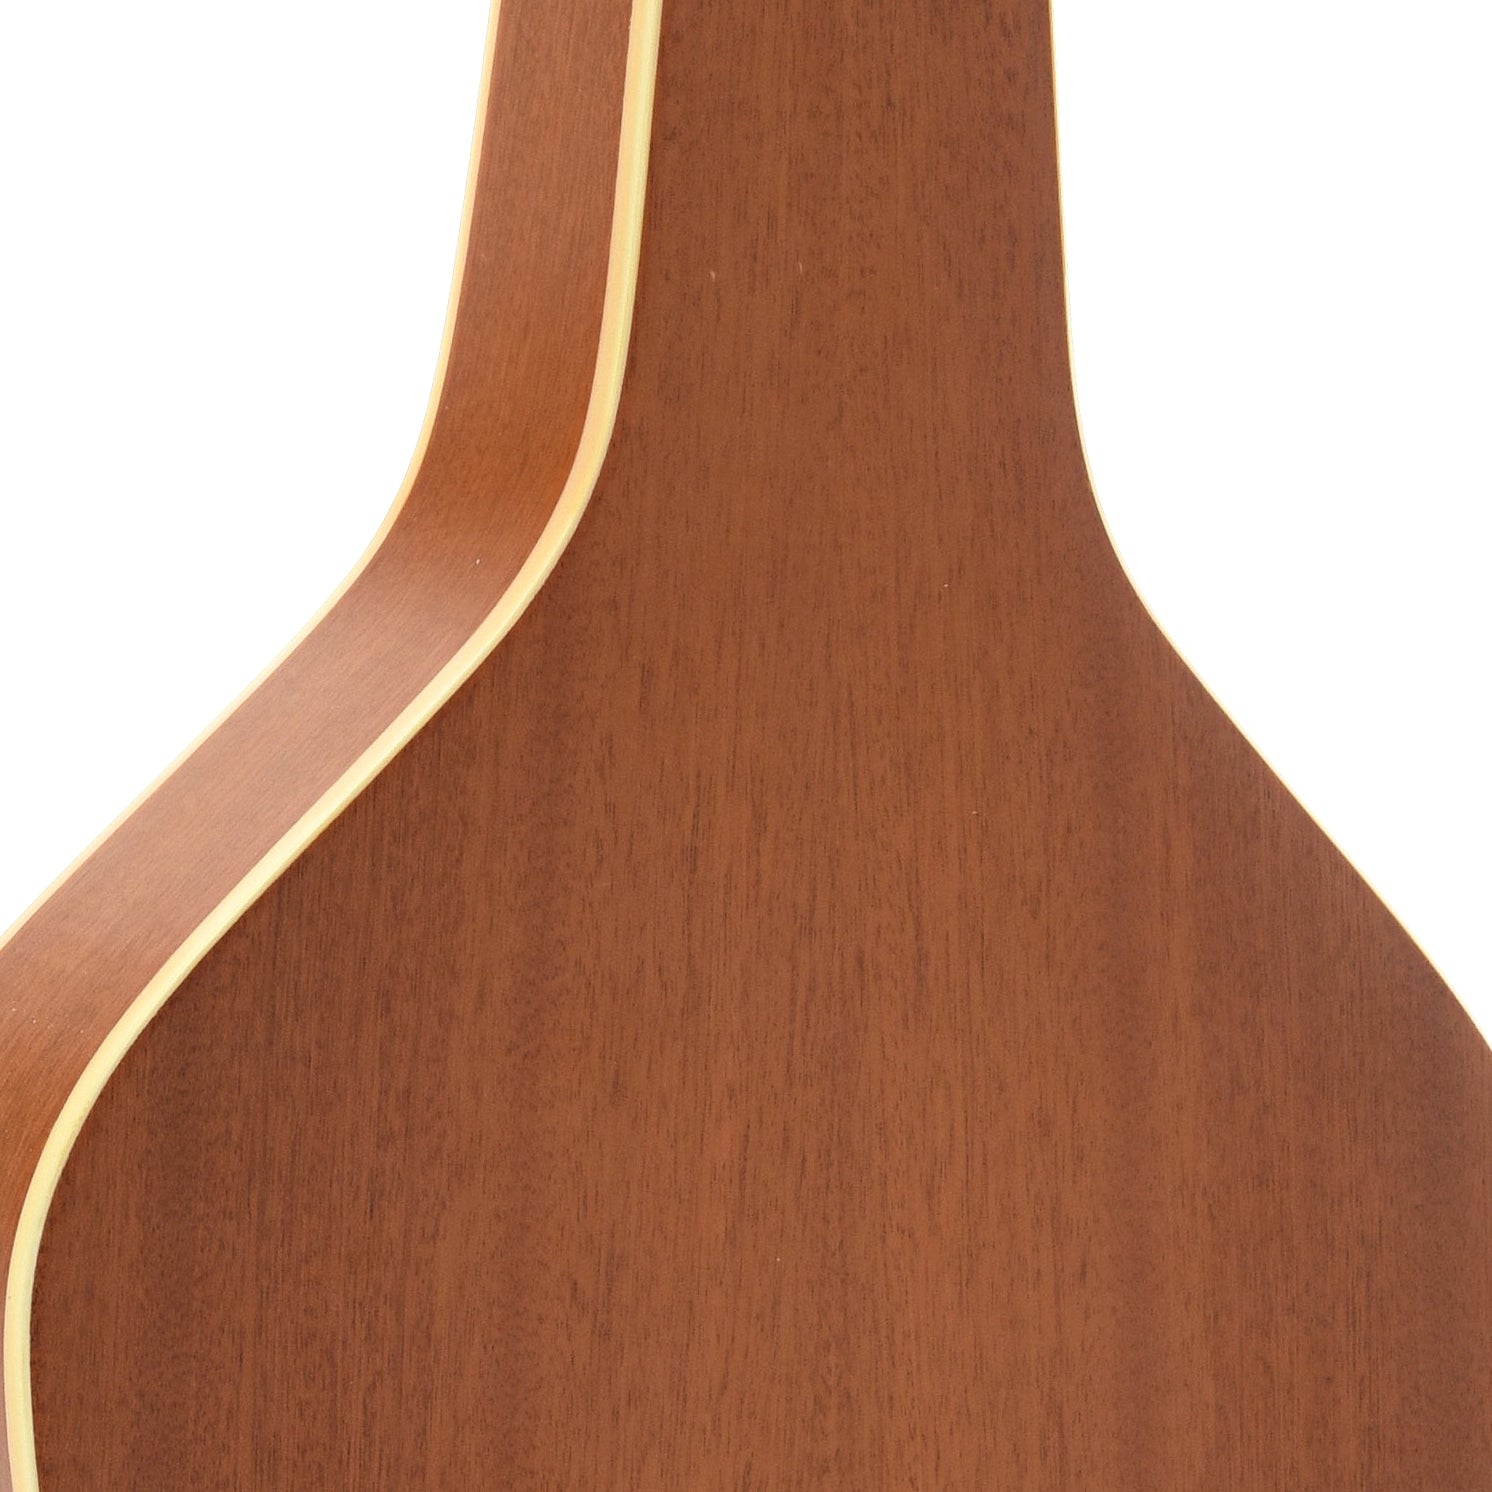 Neck Joint of Gold Tone GT Weissenborn Guitar 